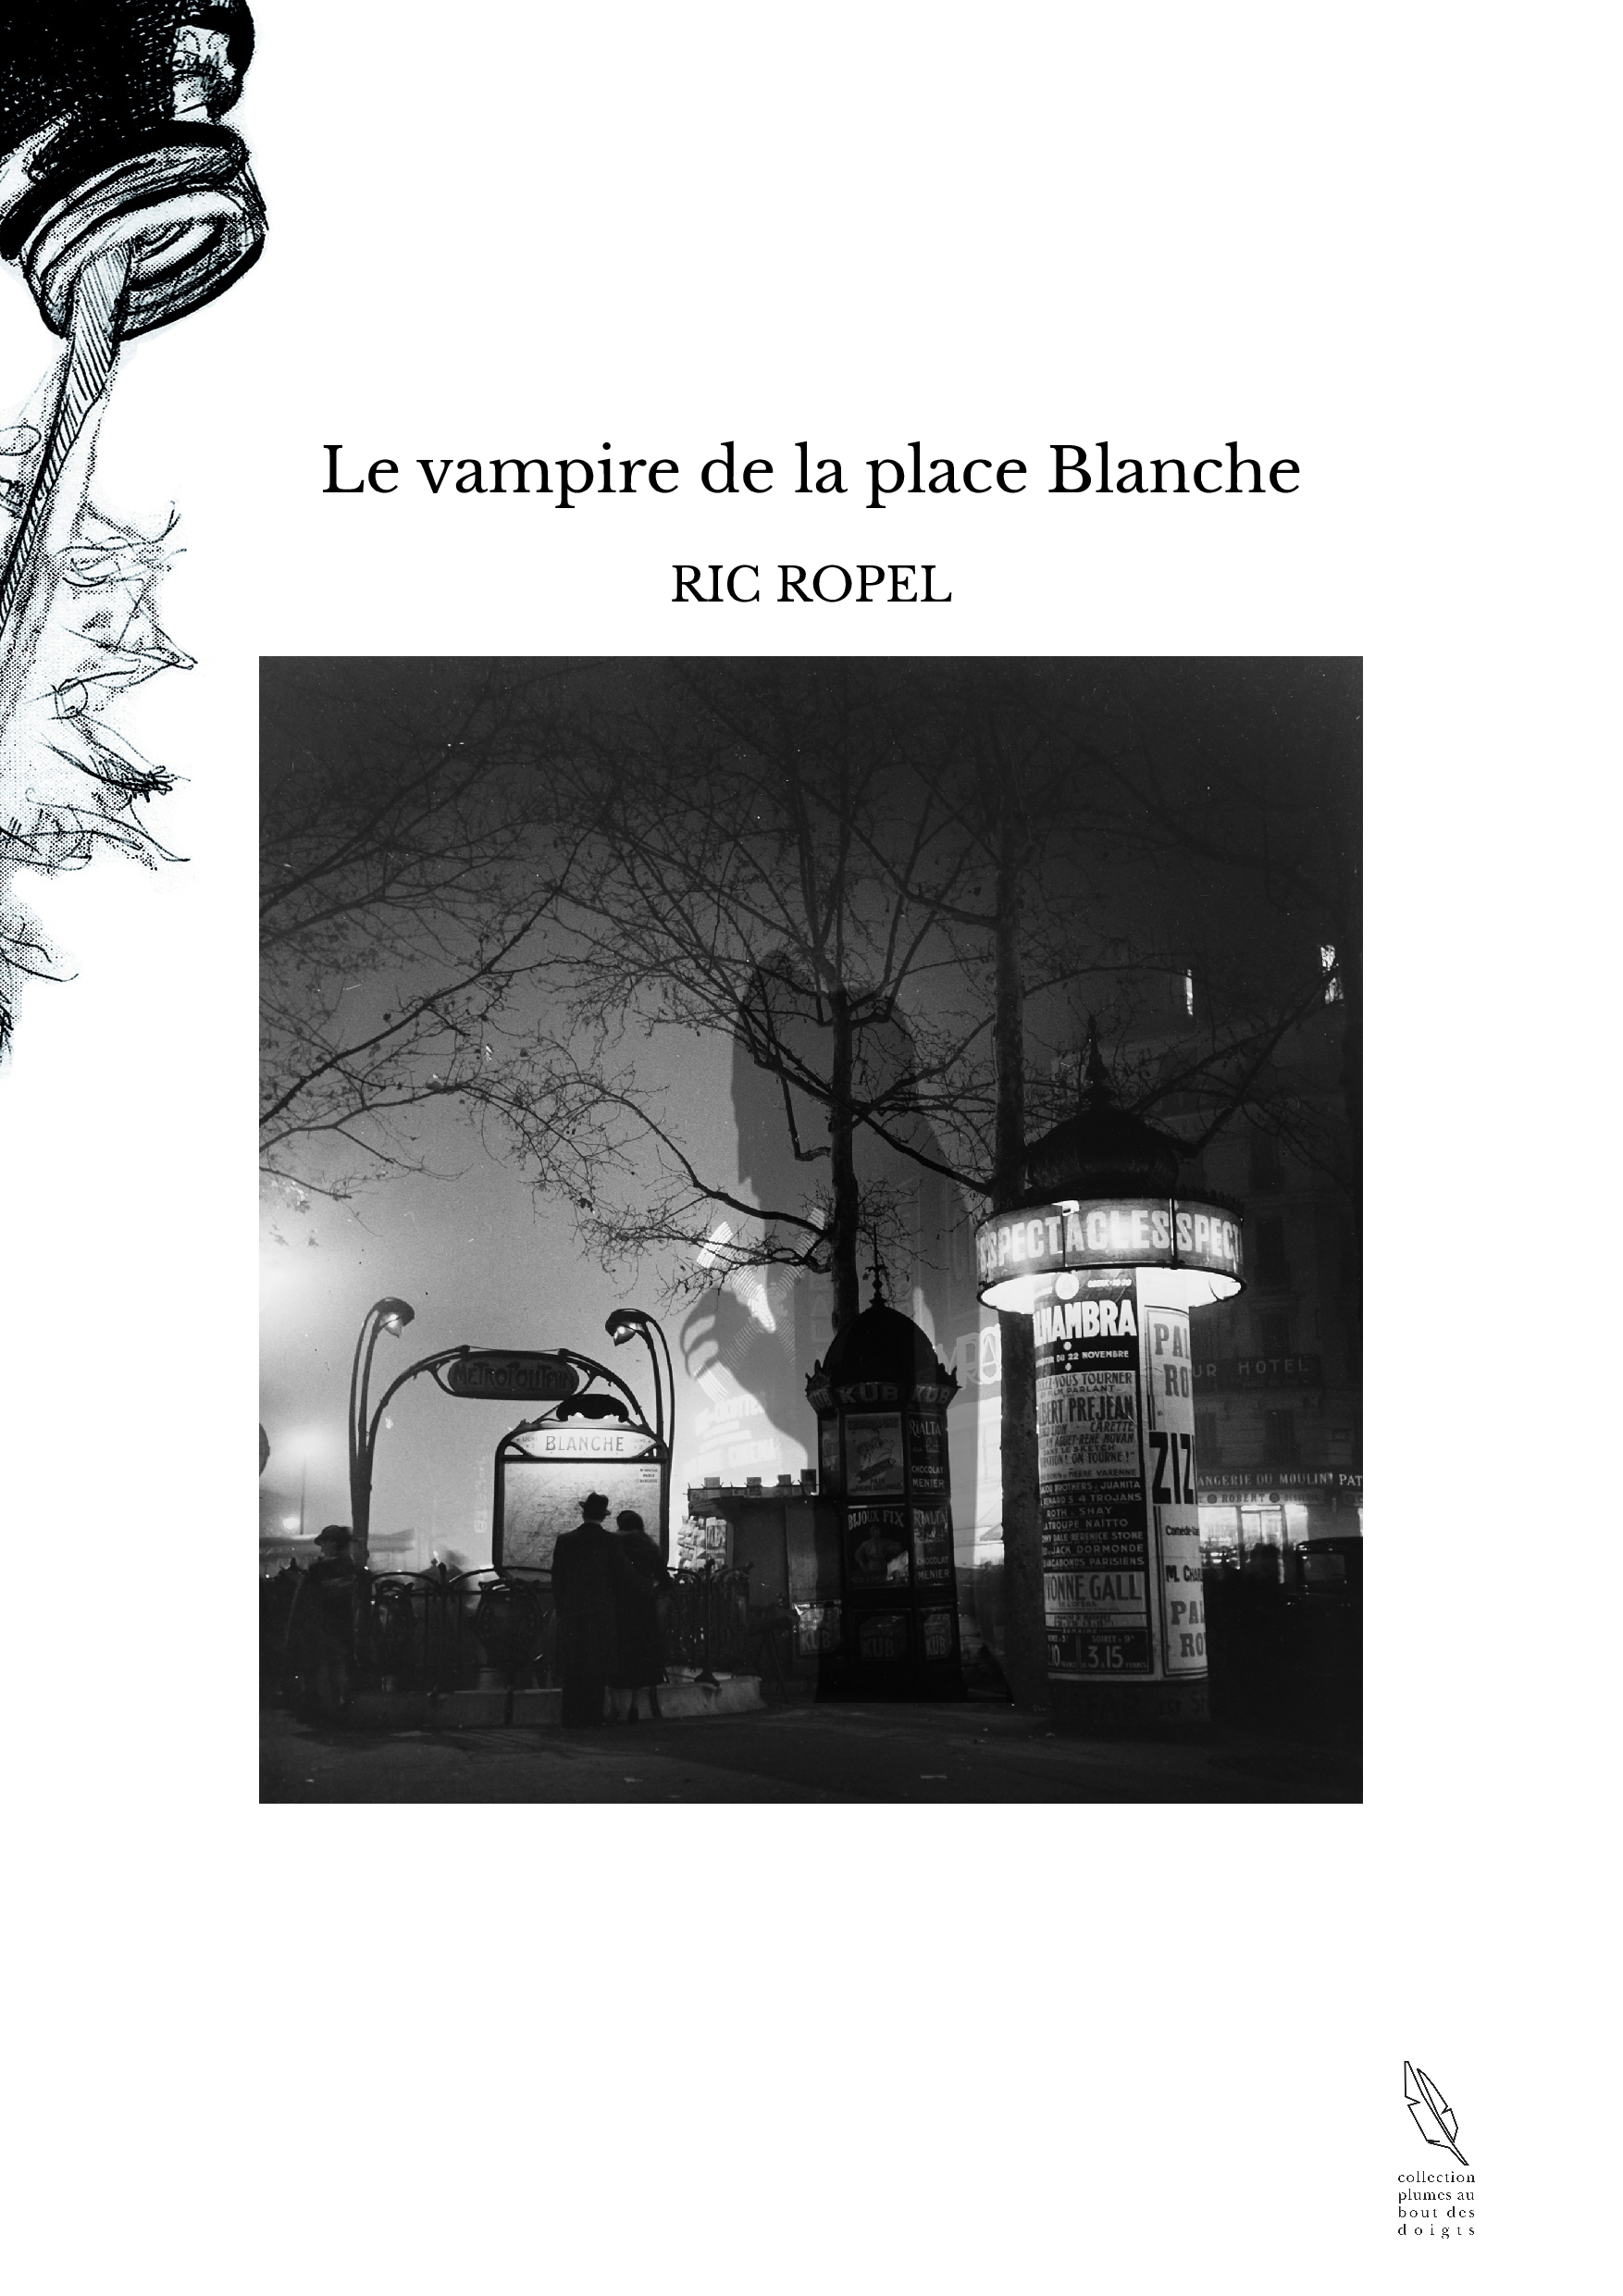 Le vampire de la place Blanche